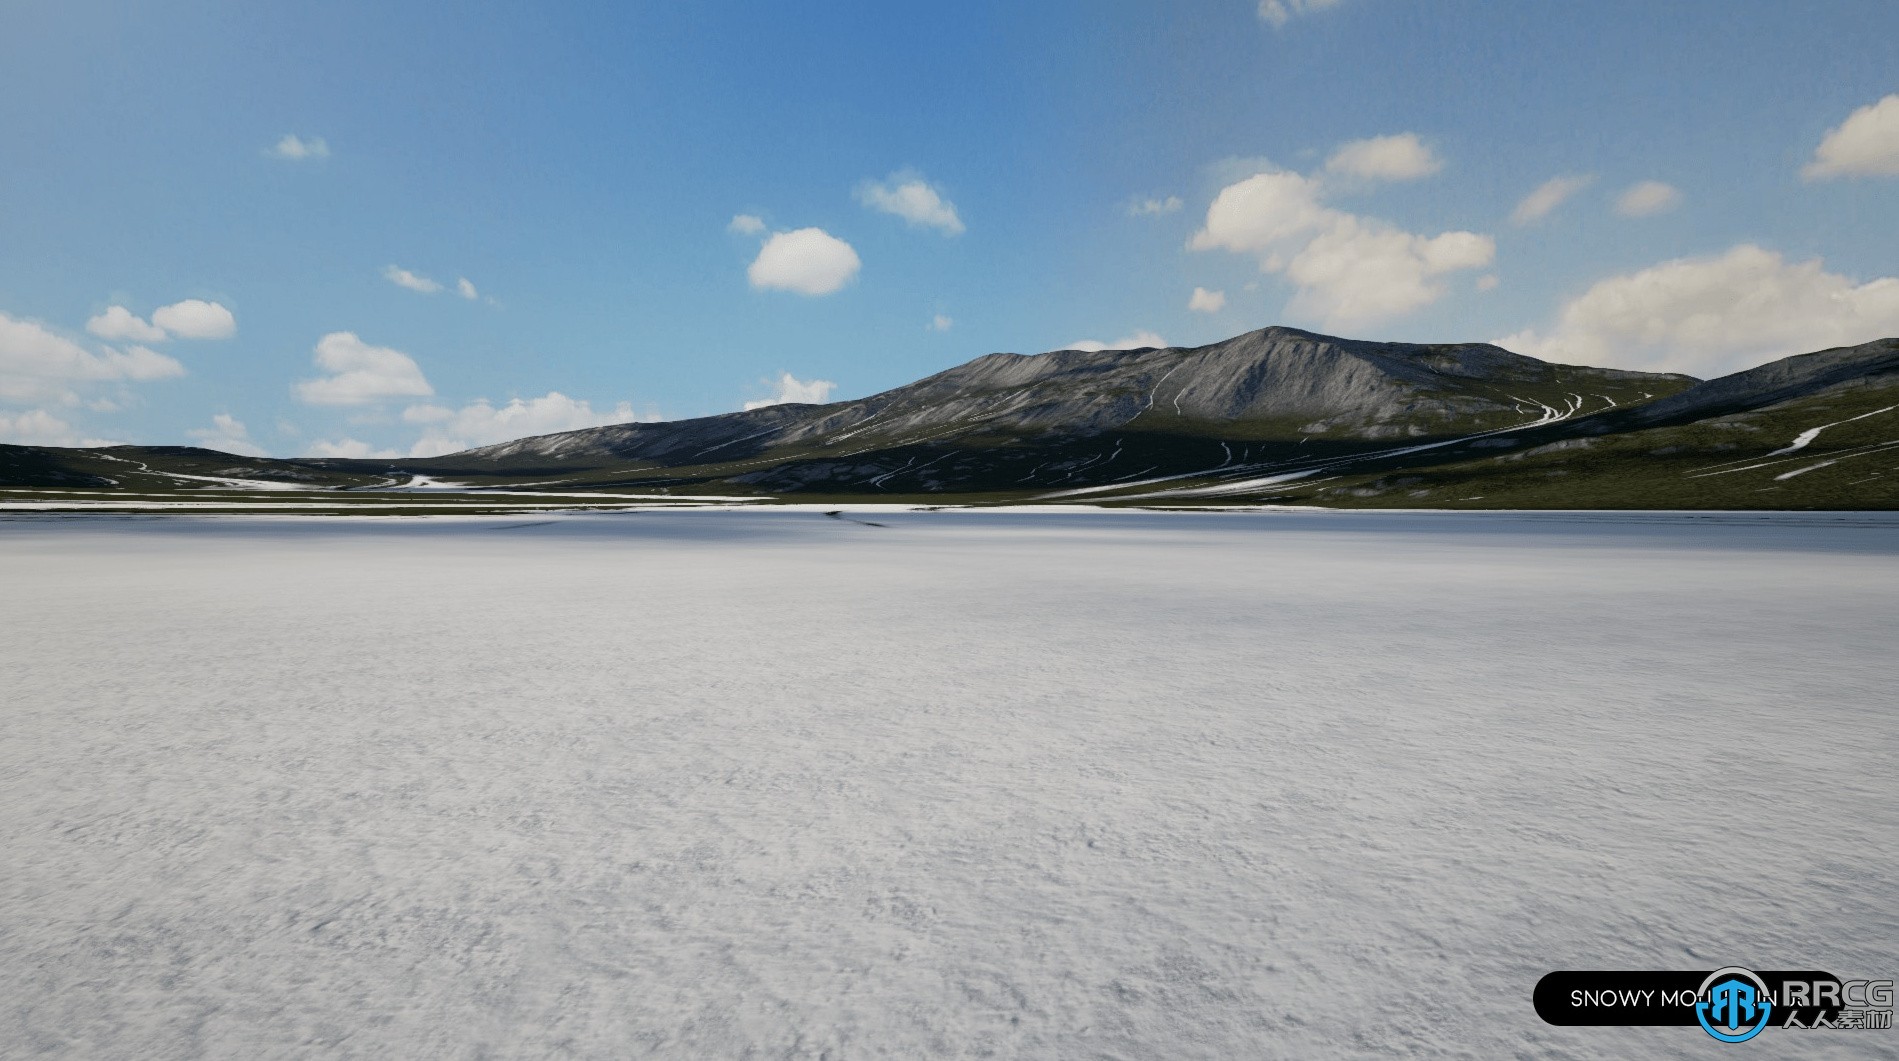 高质量自然景观环境Unreal Engine游戏素材资源